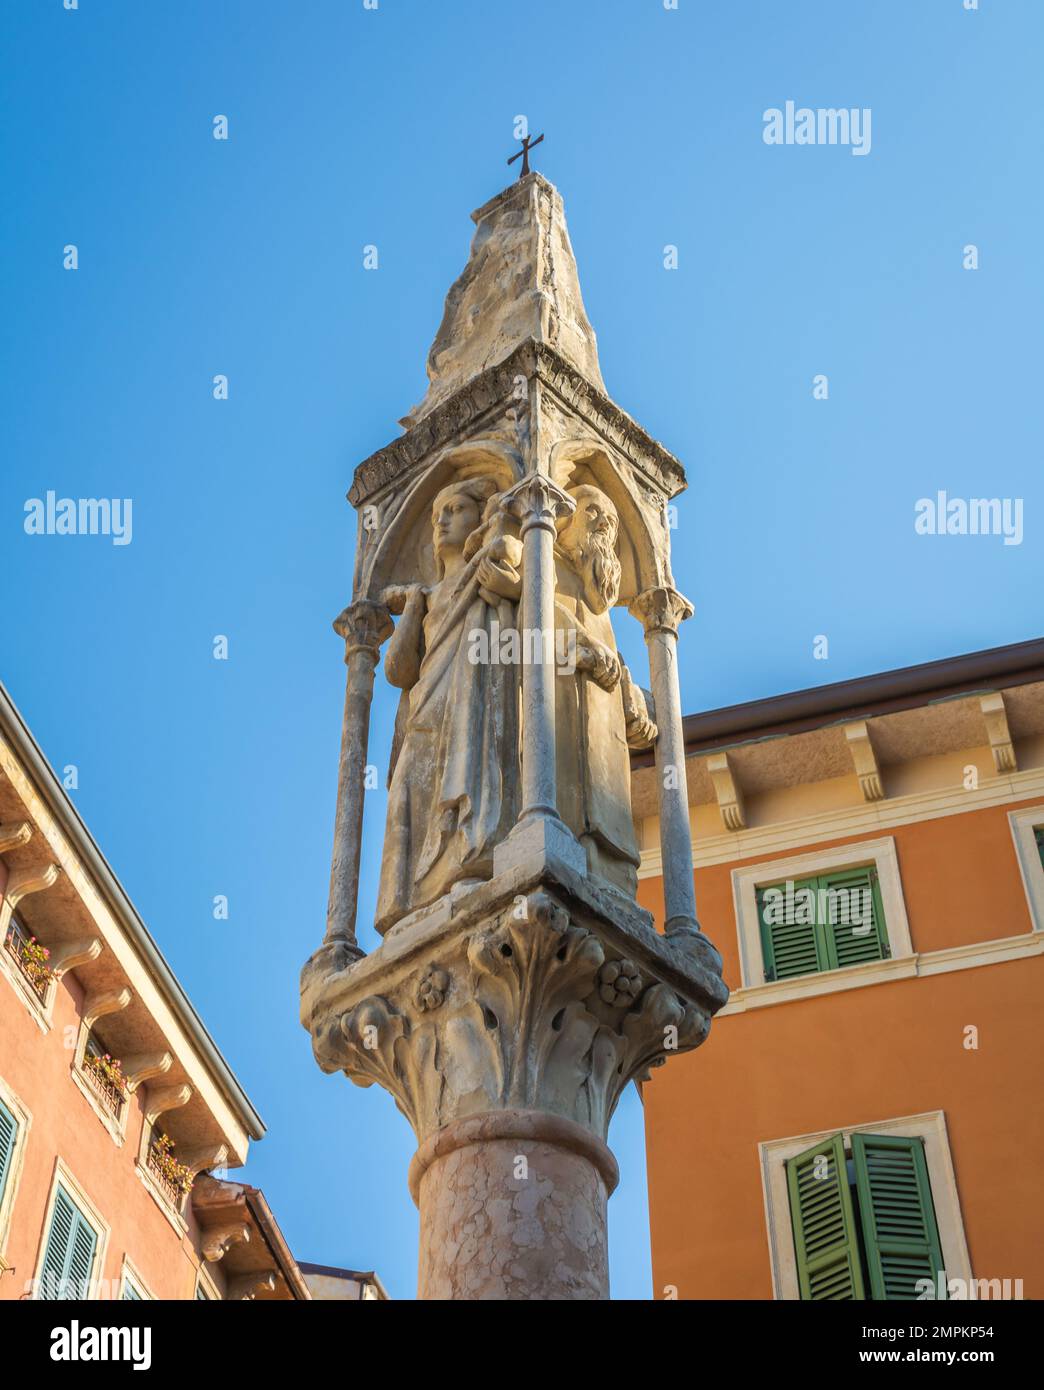 ancient gothic votive shrine depicting the Madonna and Saints in Piazza Brà, Verona city, Veneto region - Europe Stock Photo